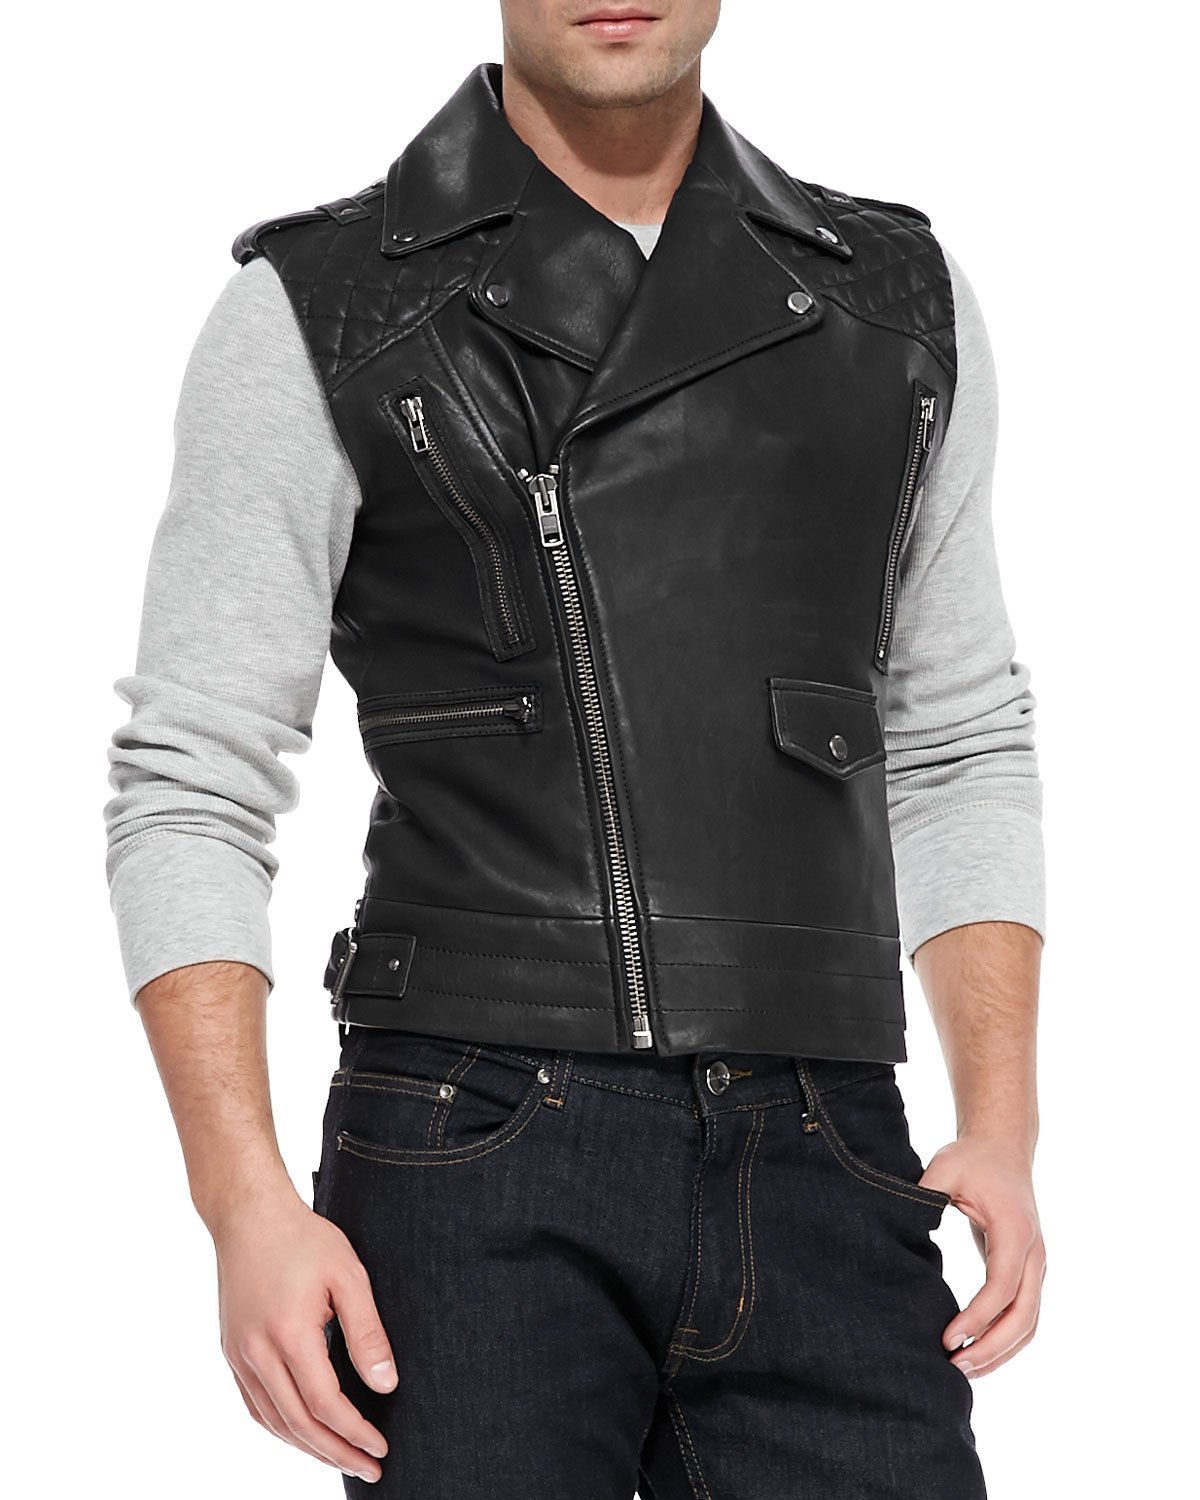 Buy Real Biker Jacket Sleeveless Blazer For Men in Black Color All Size ...